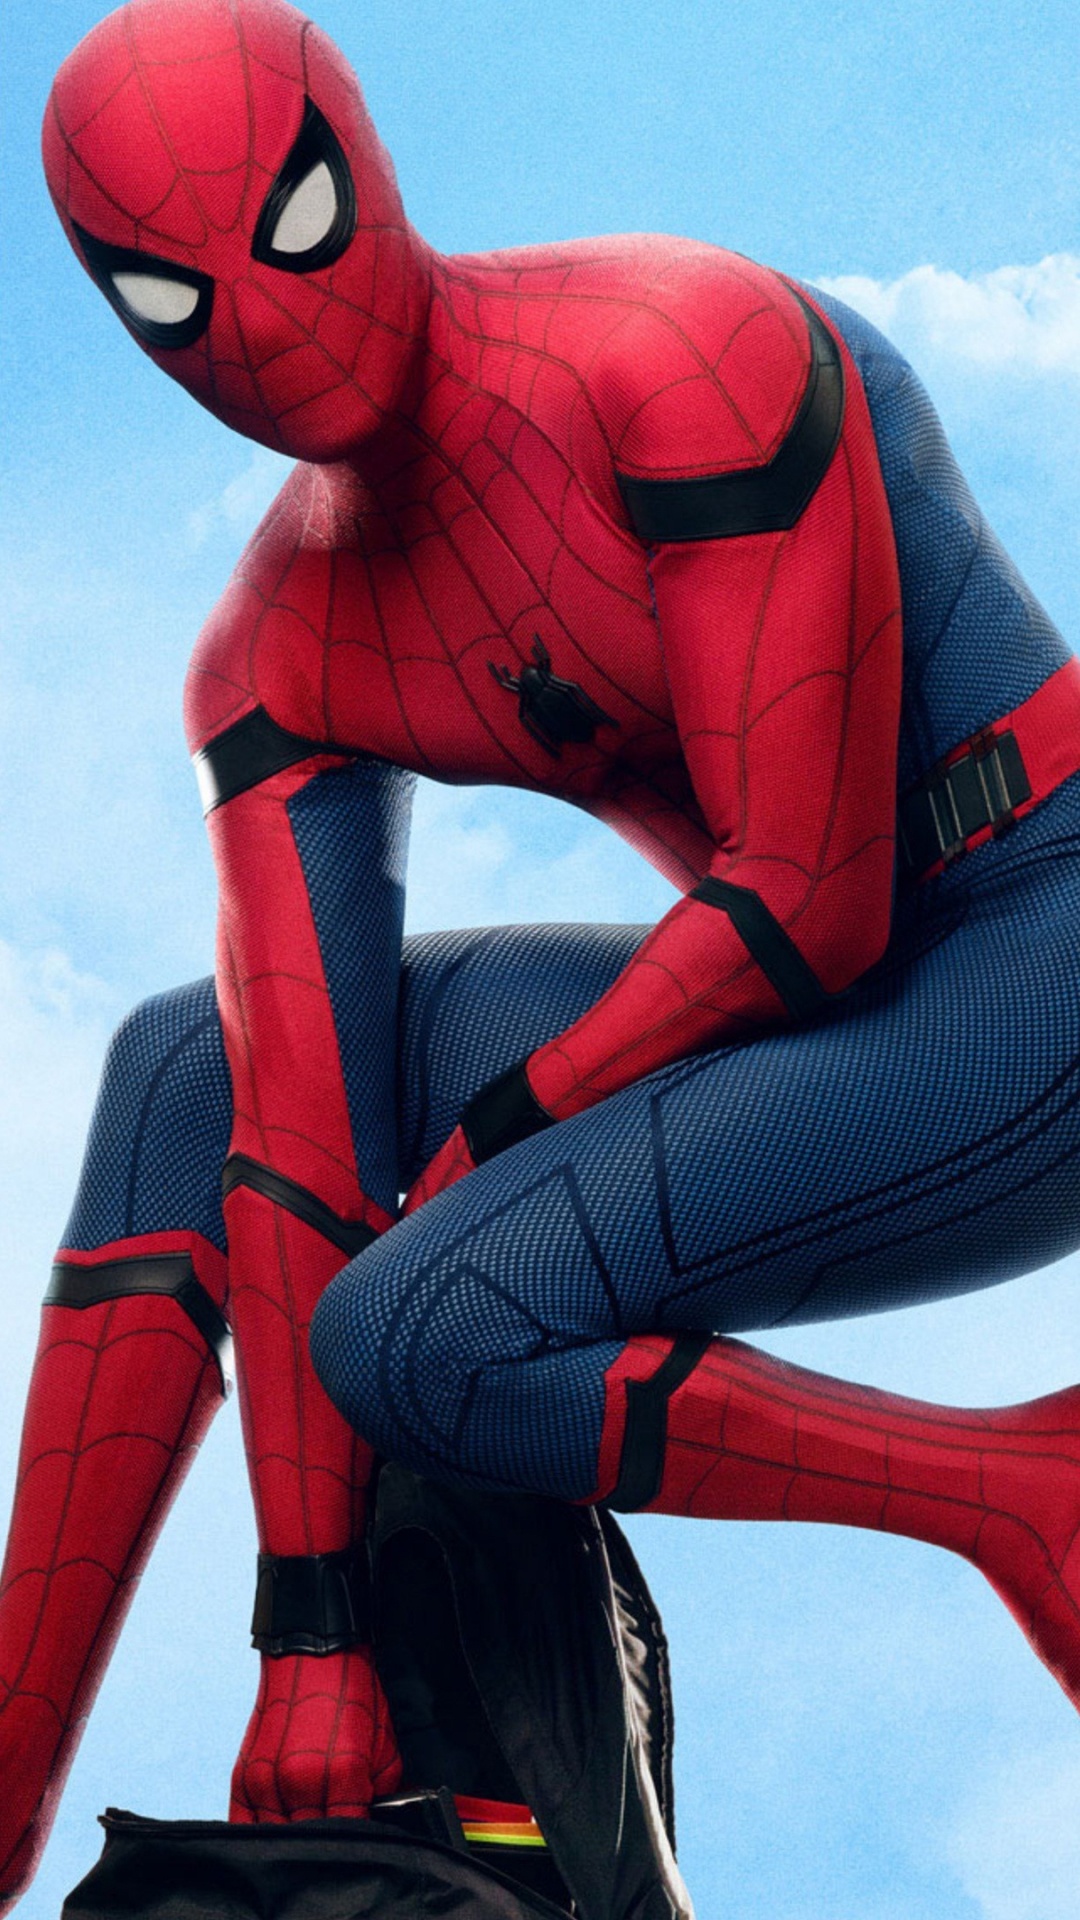 Spider-man, 蜘蛛侠回家, 超级英雄, 演员, 超级英雄电影 壁纸 1080x1920 允许